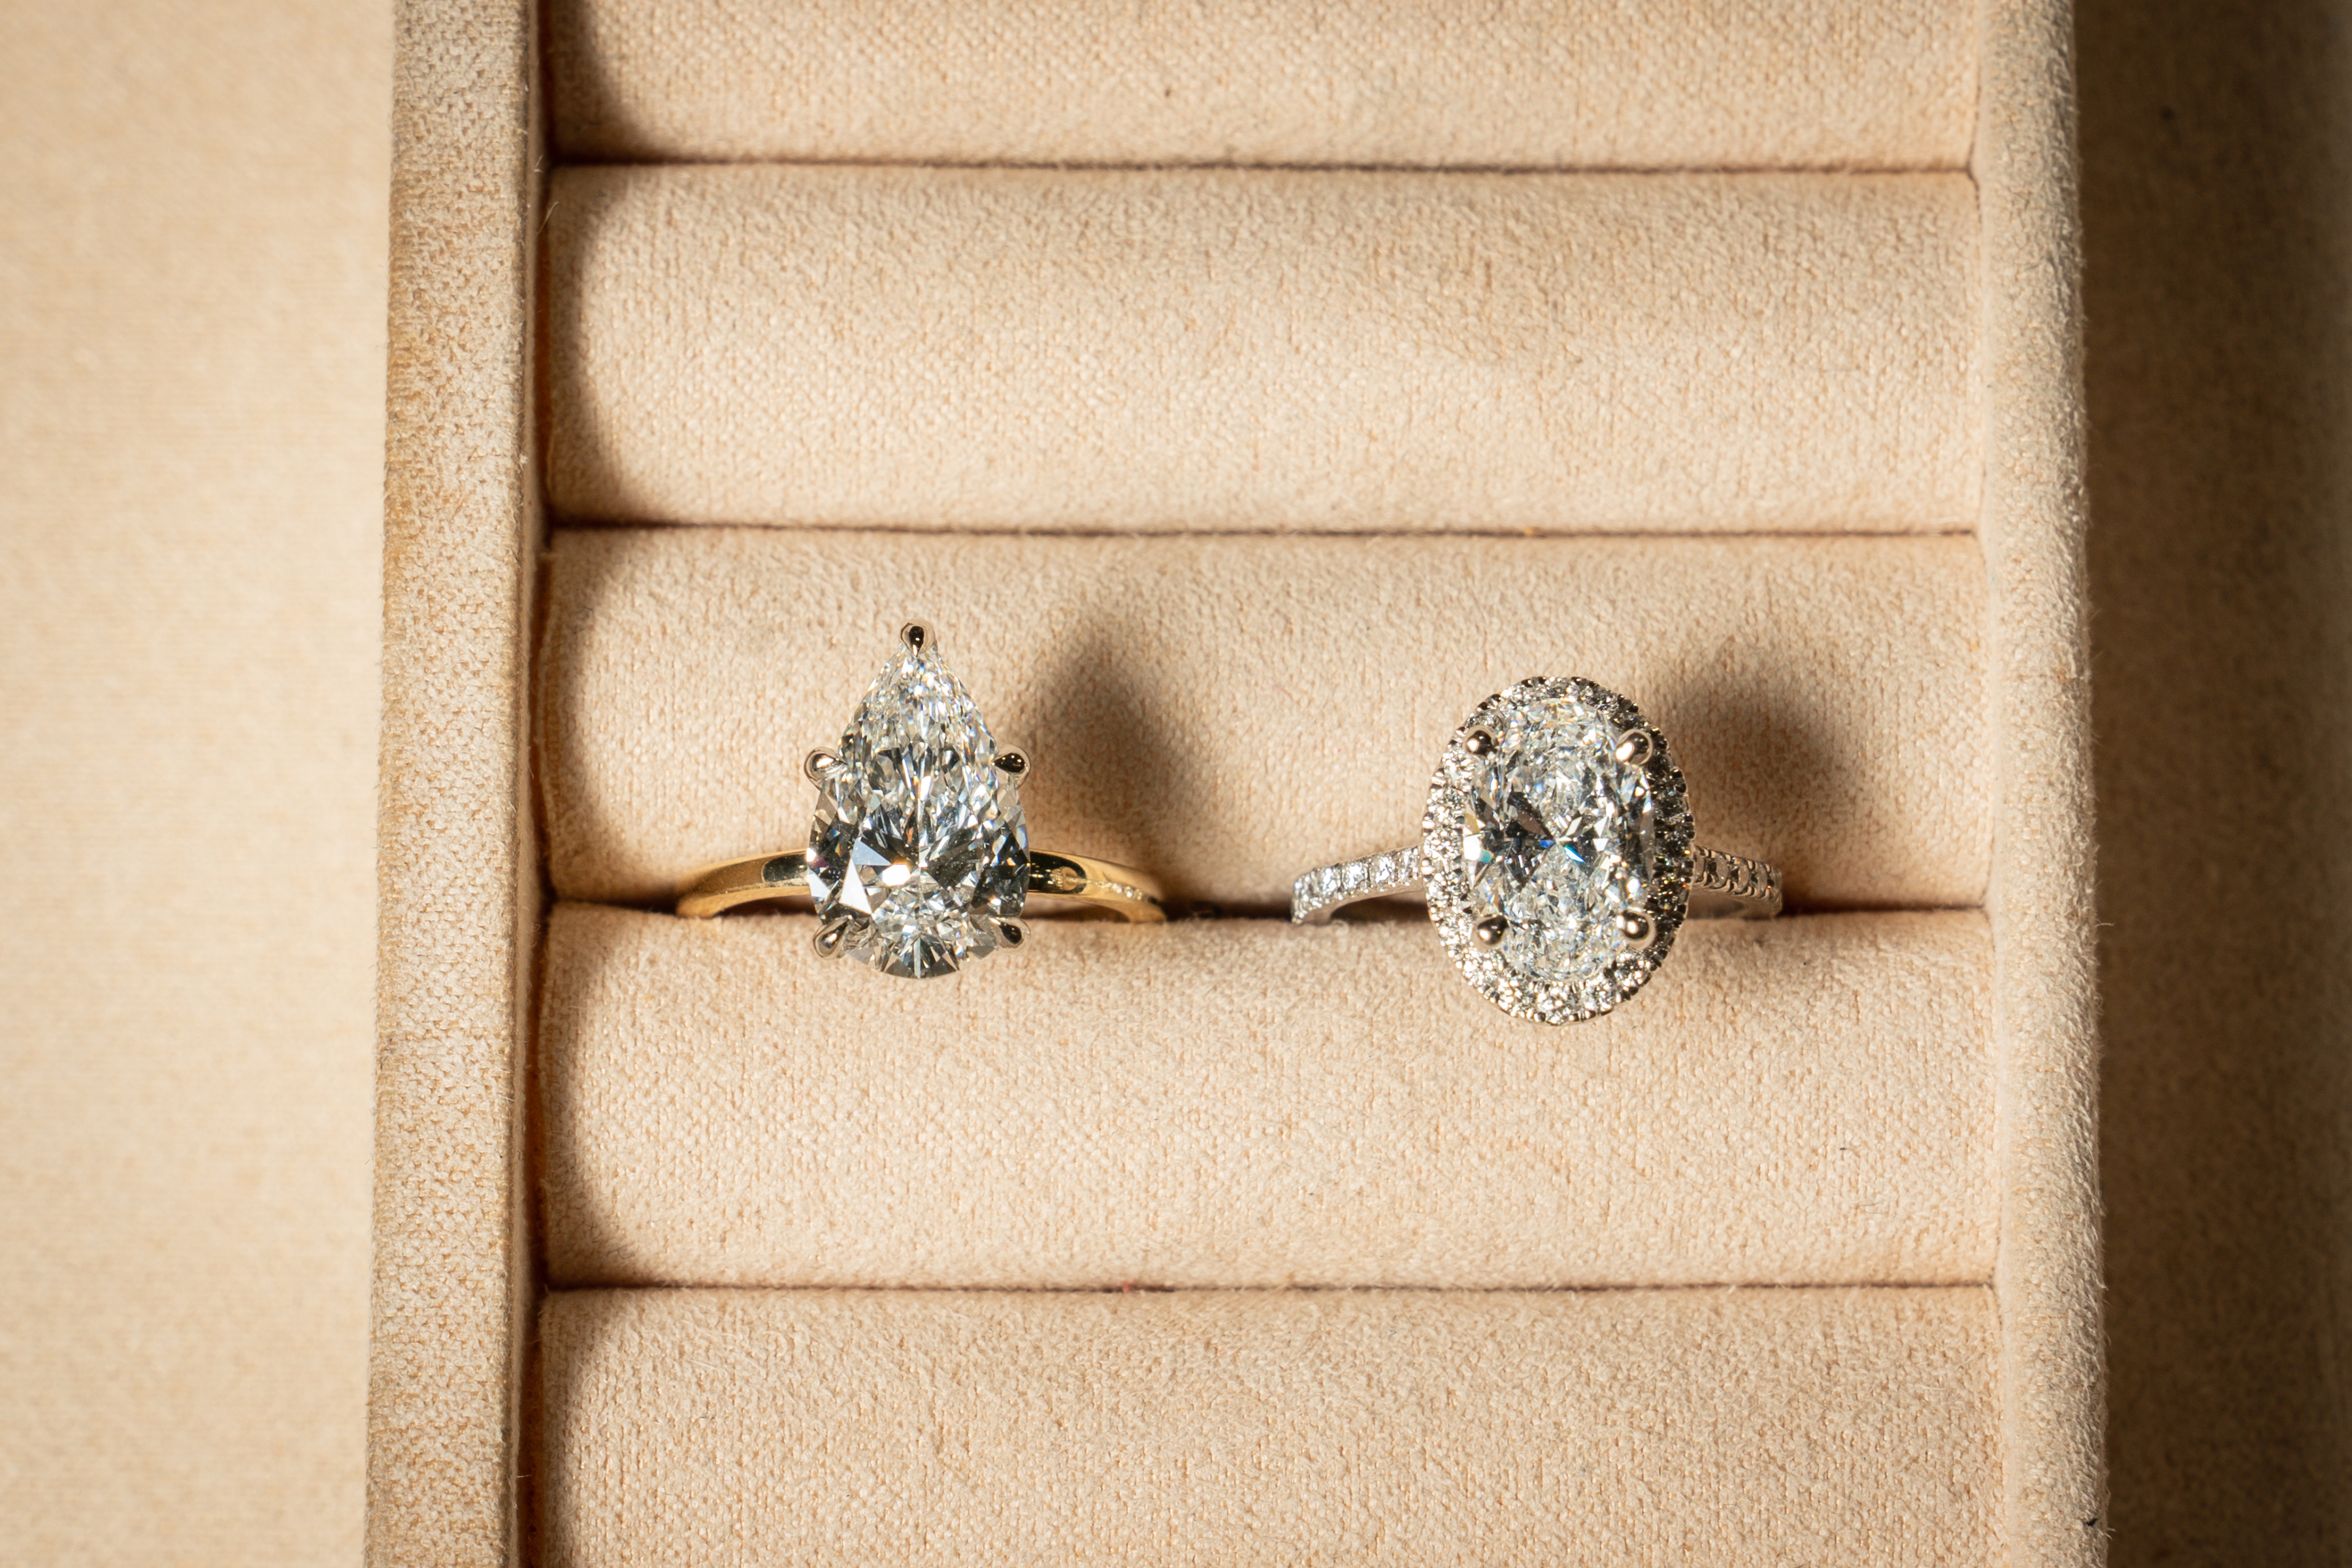 10 Ways to Spot Fake Diamond Jewelry